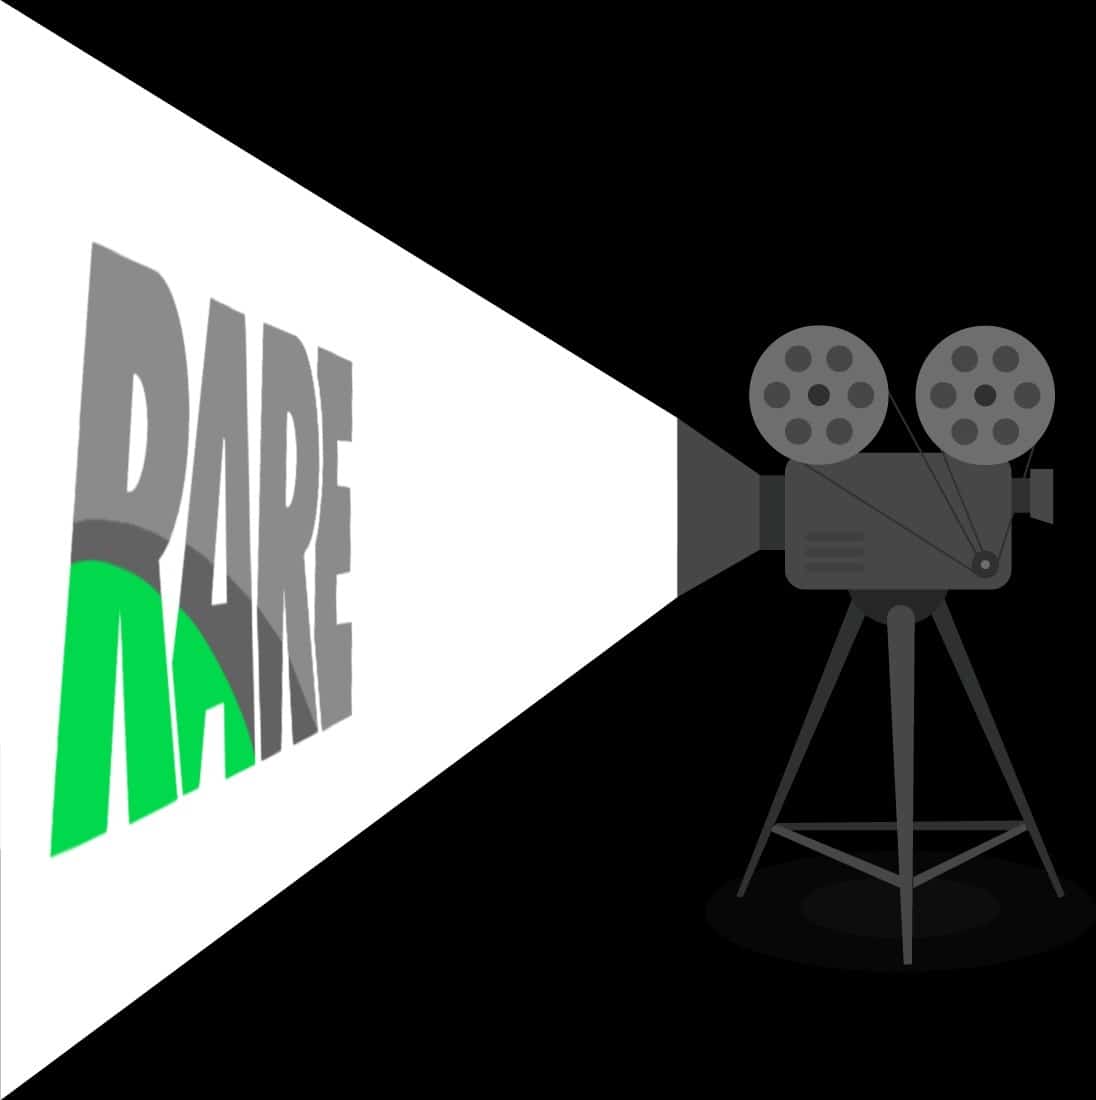 RARE Documentary Debuts